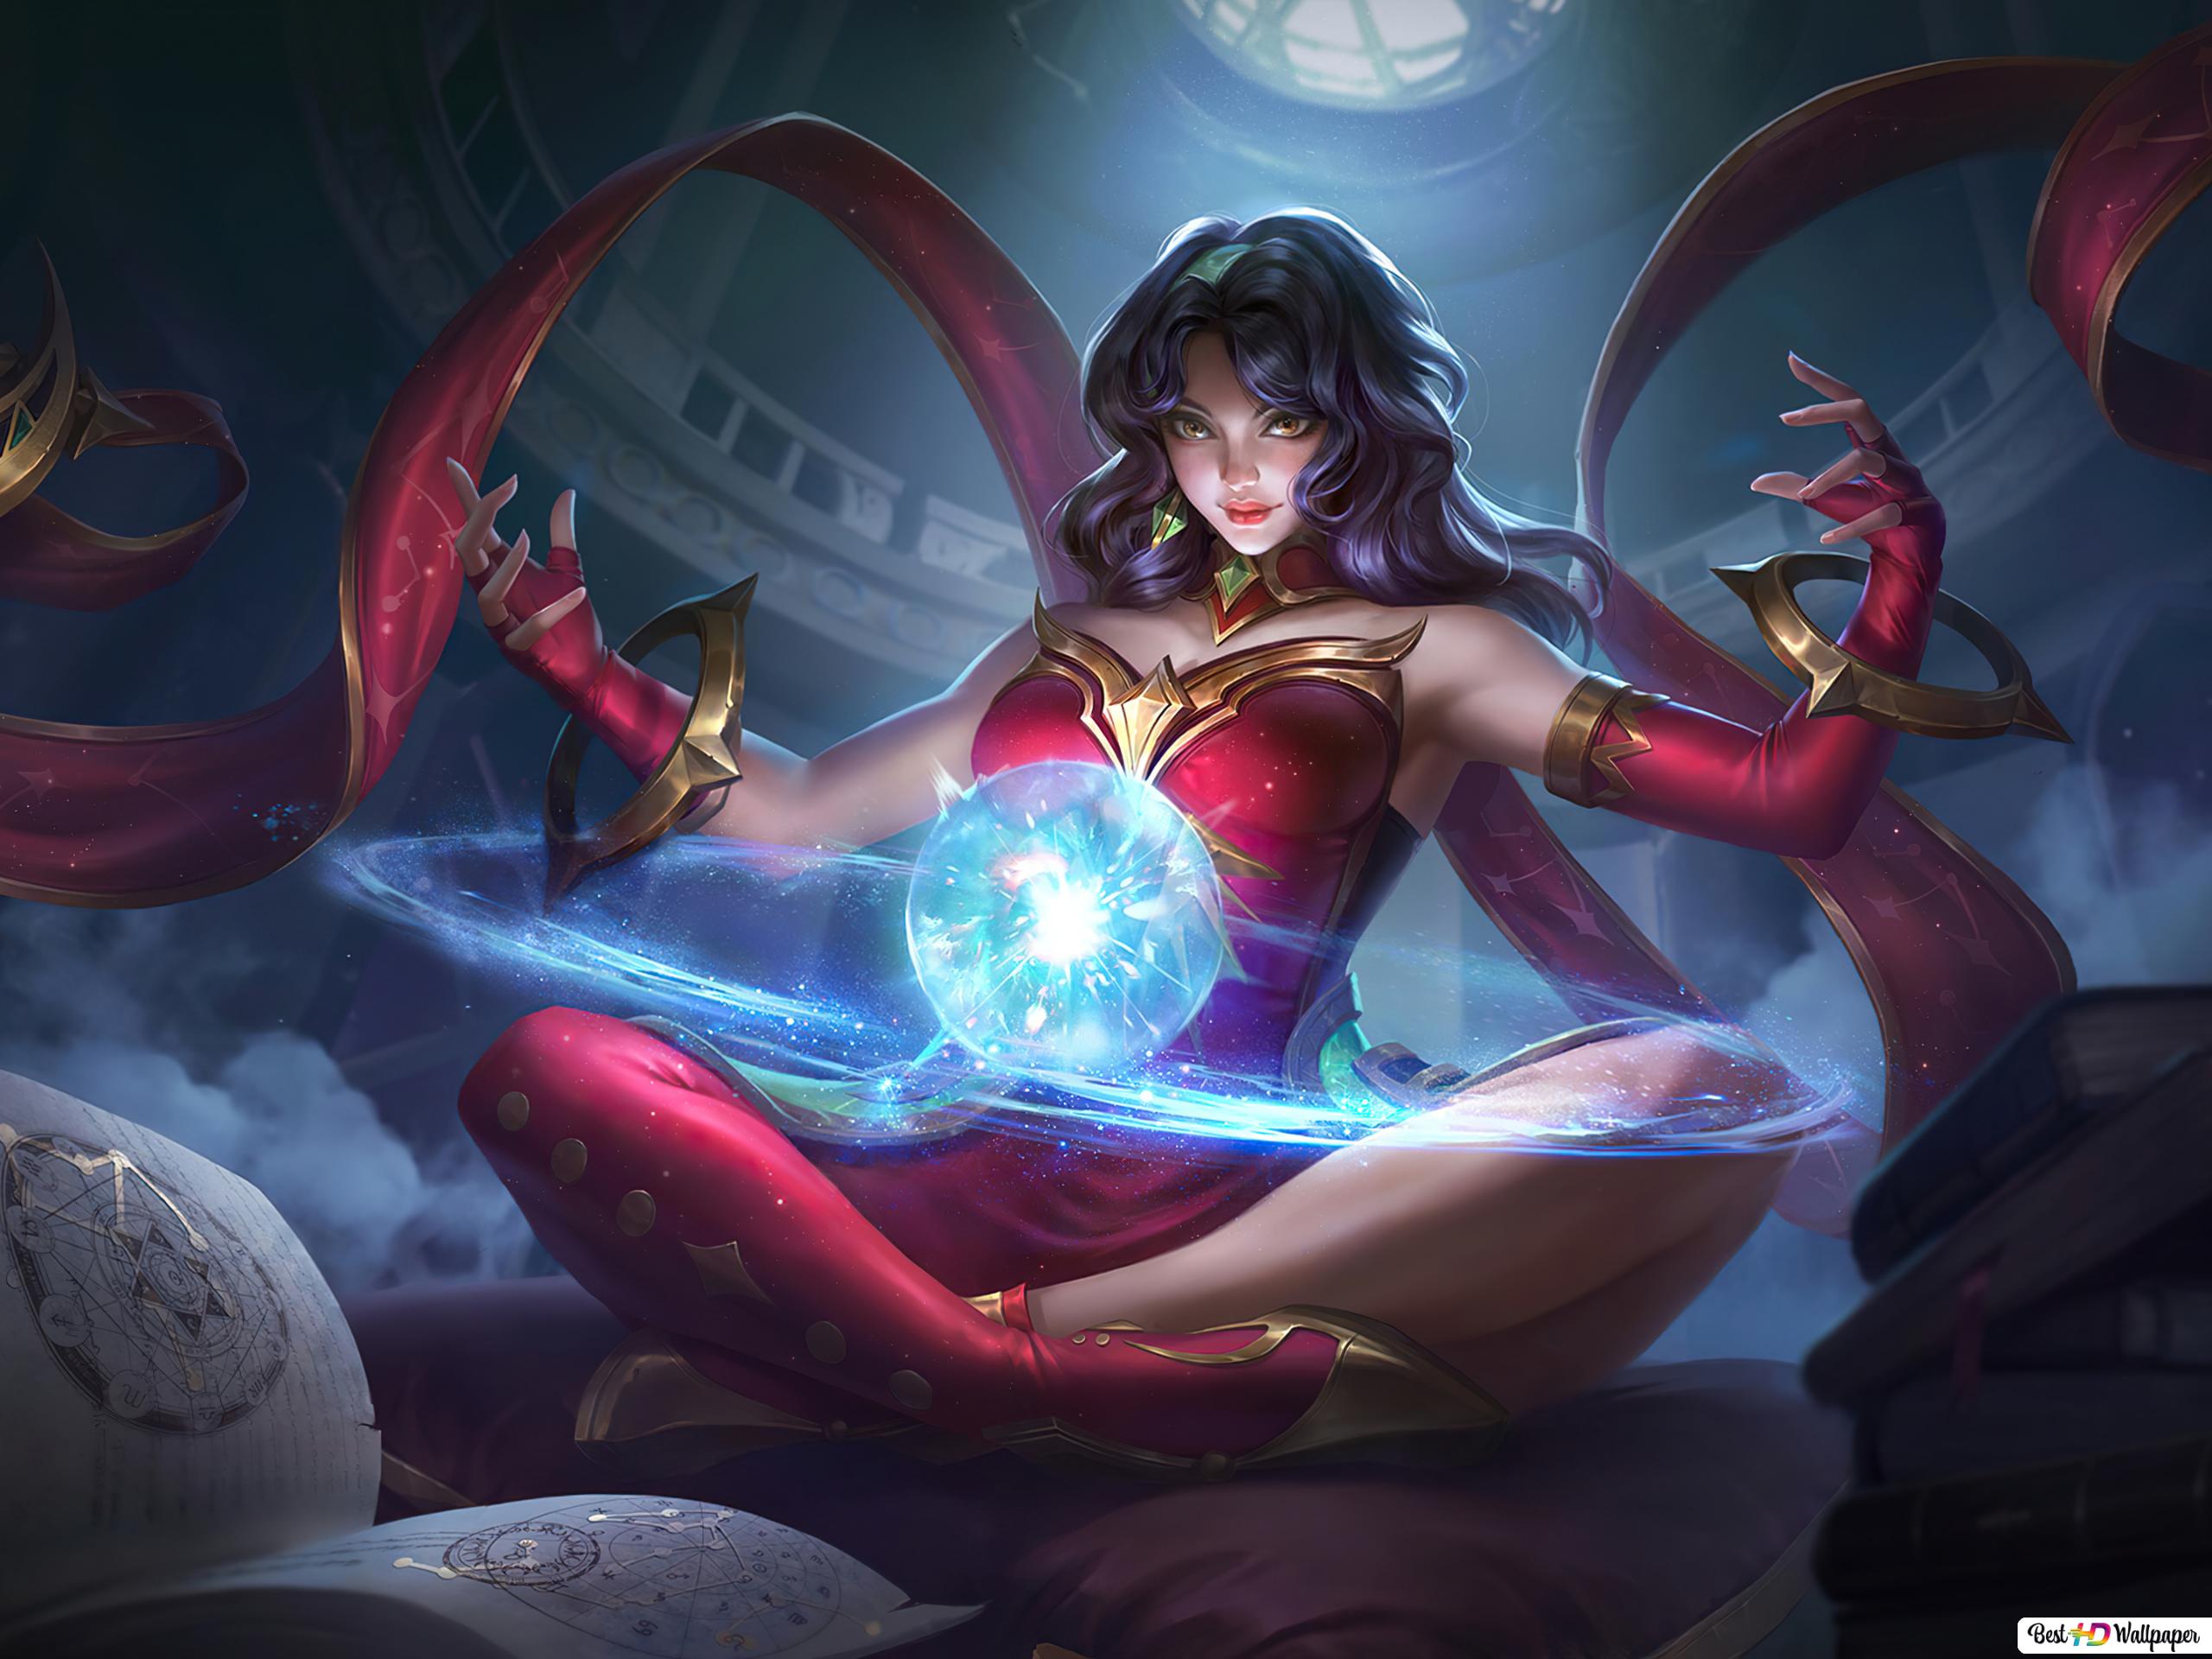 Esmeralda - Mobile Legends: Bang Bang